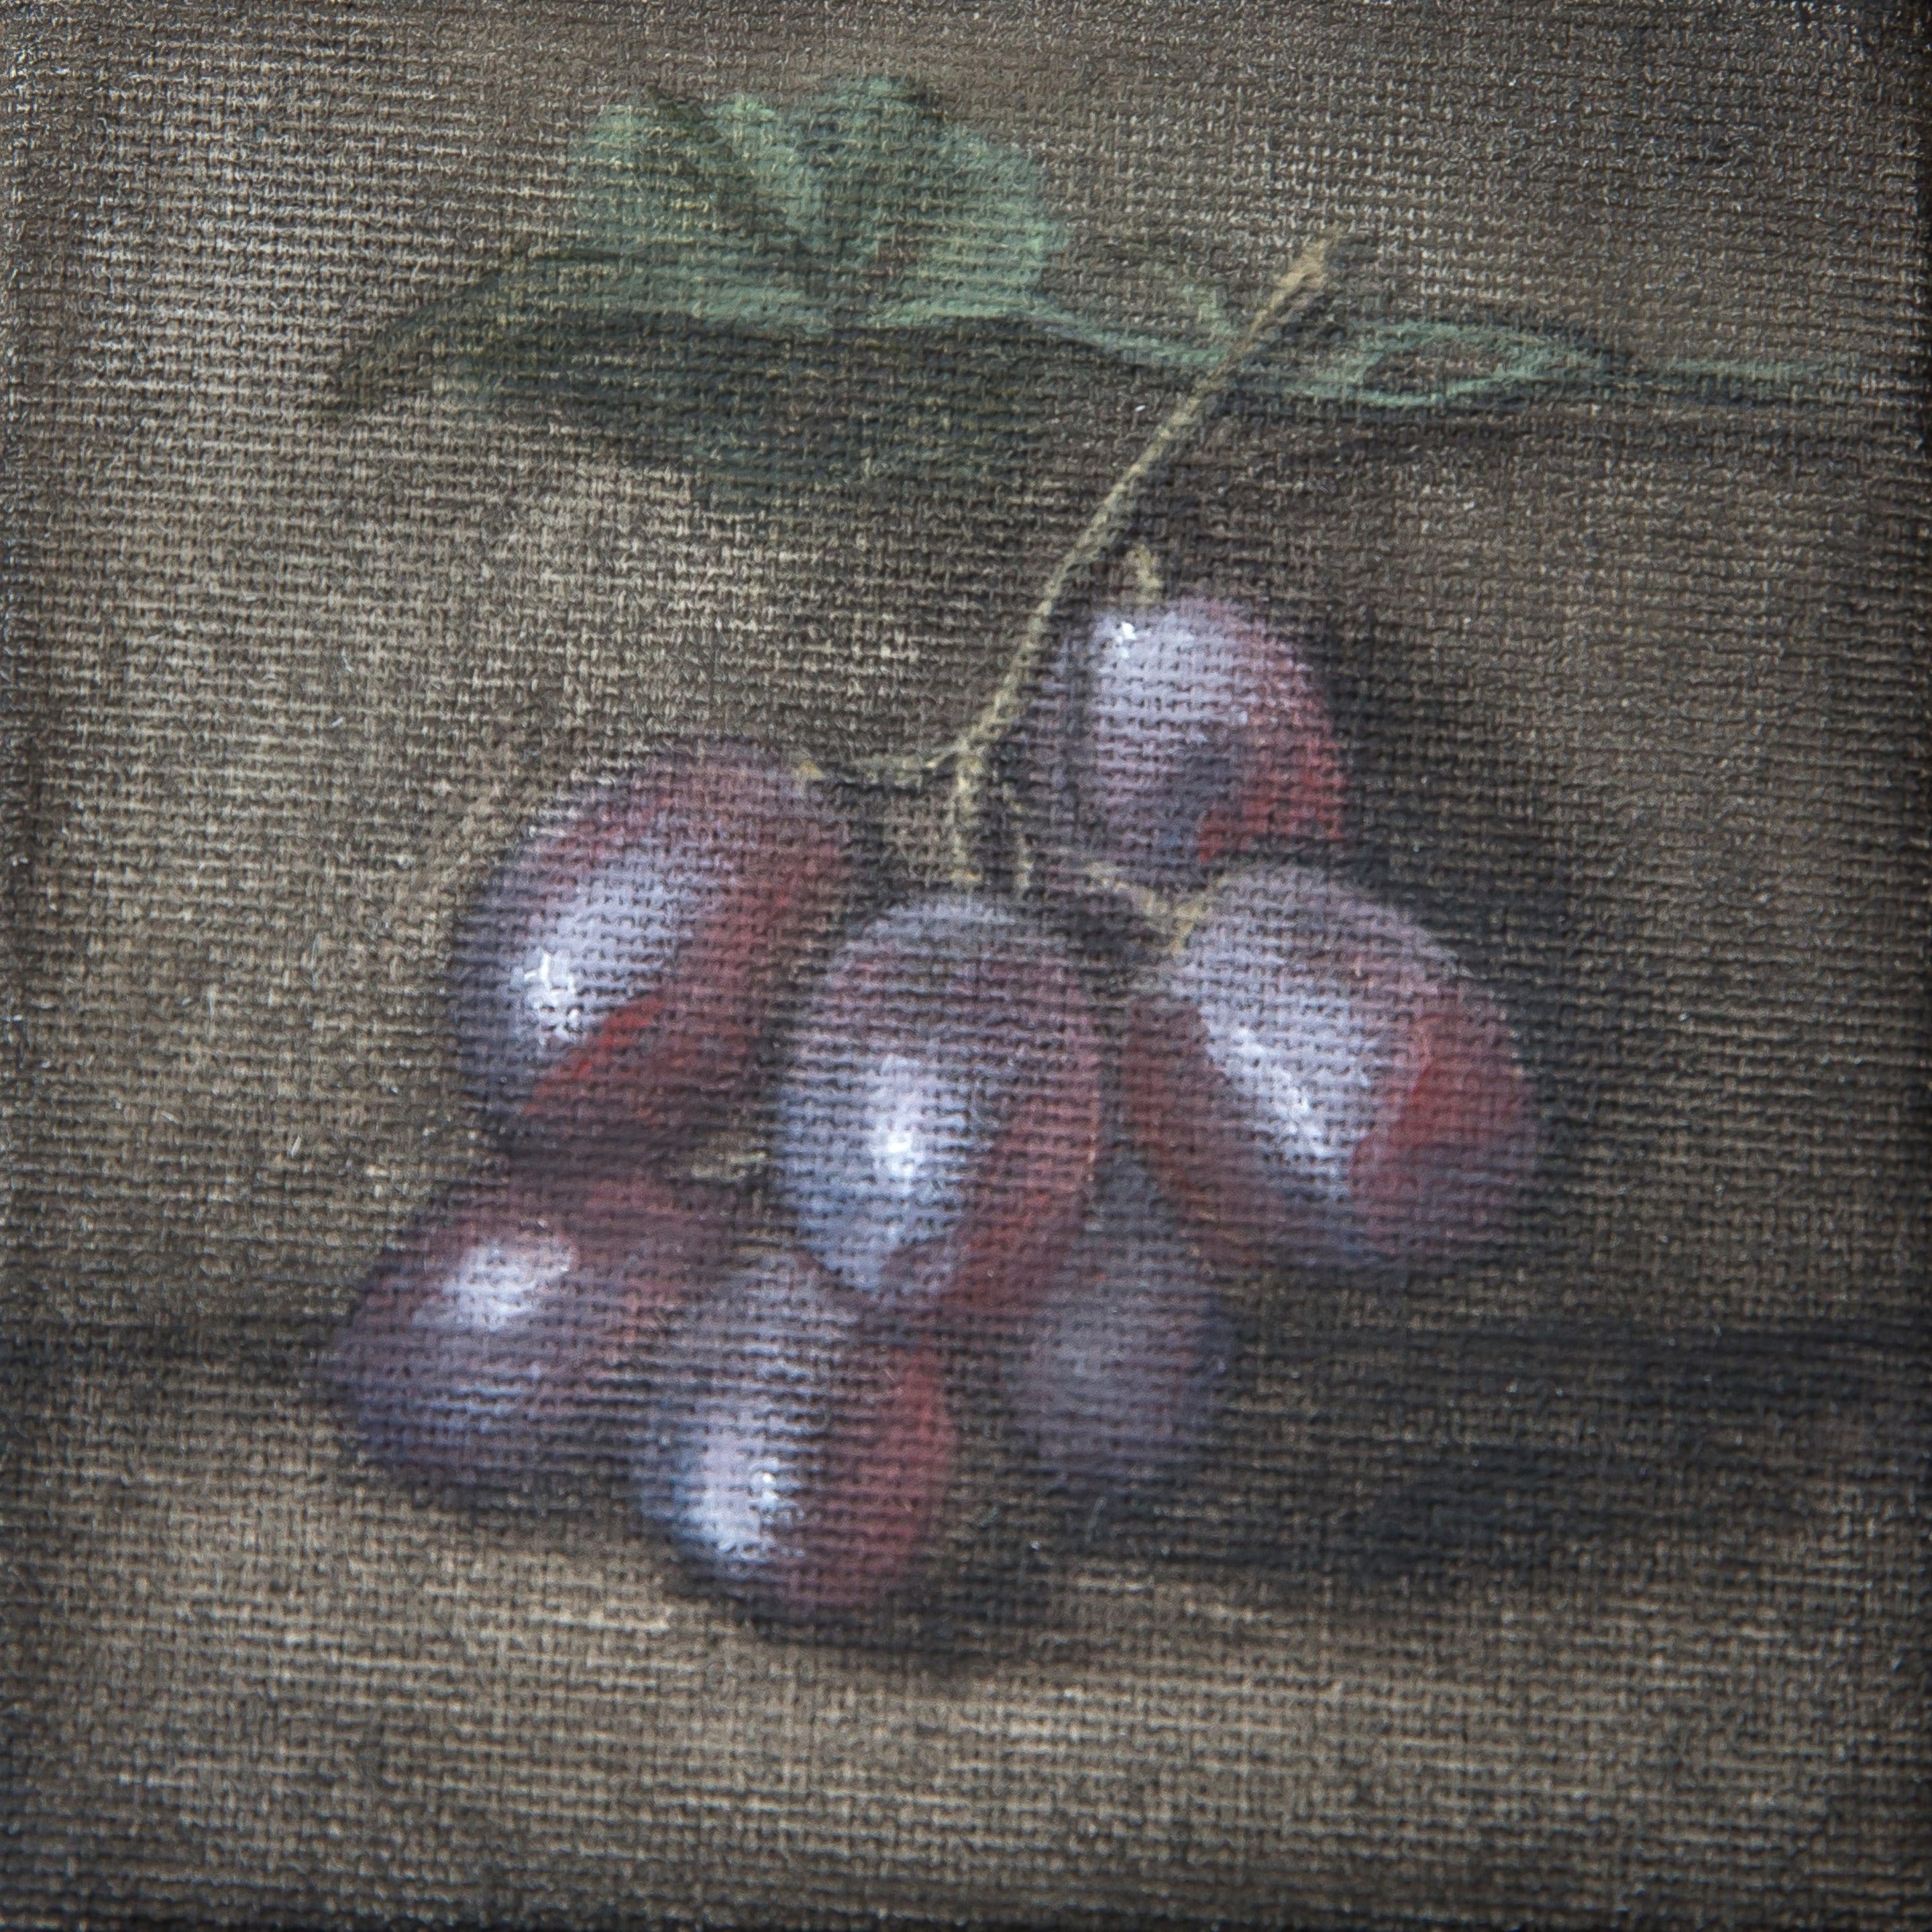 Bunch of Grapes - Renata Grzan Wieczorek